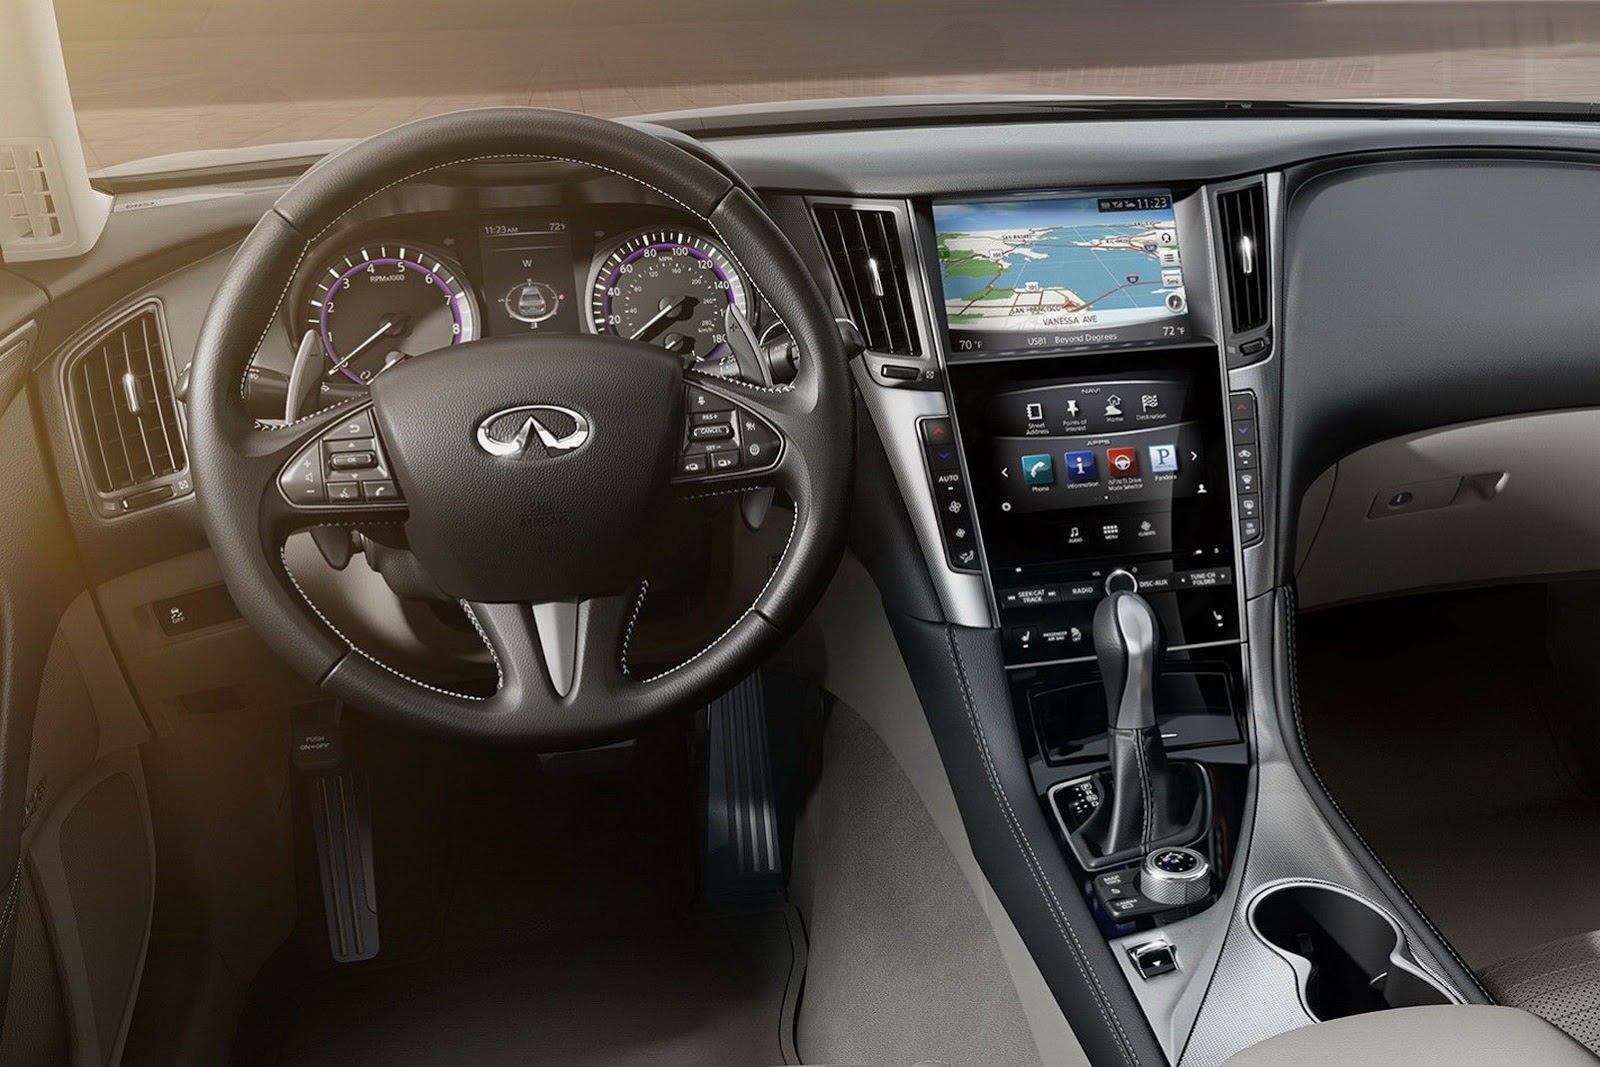 2014 Infiniti Q50 Dashboard Interior View